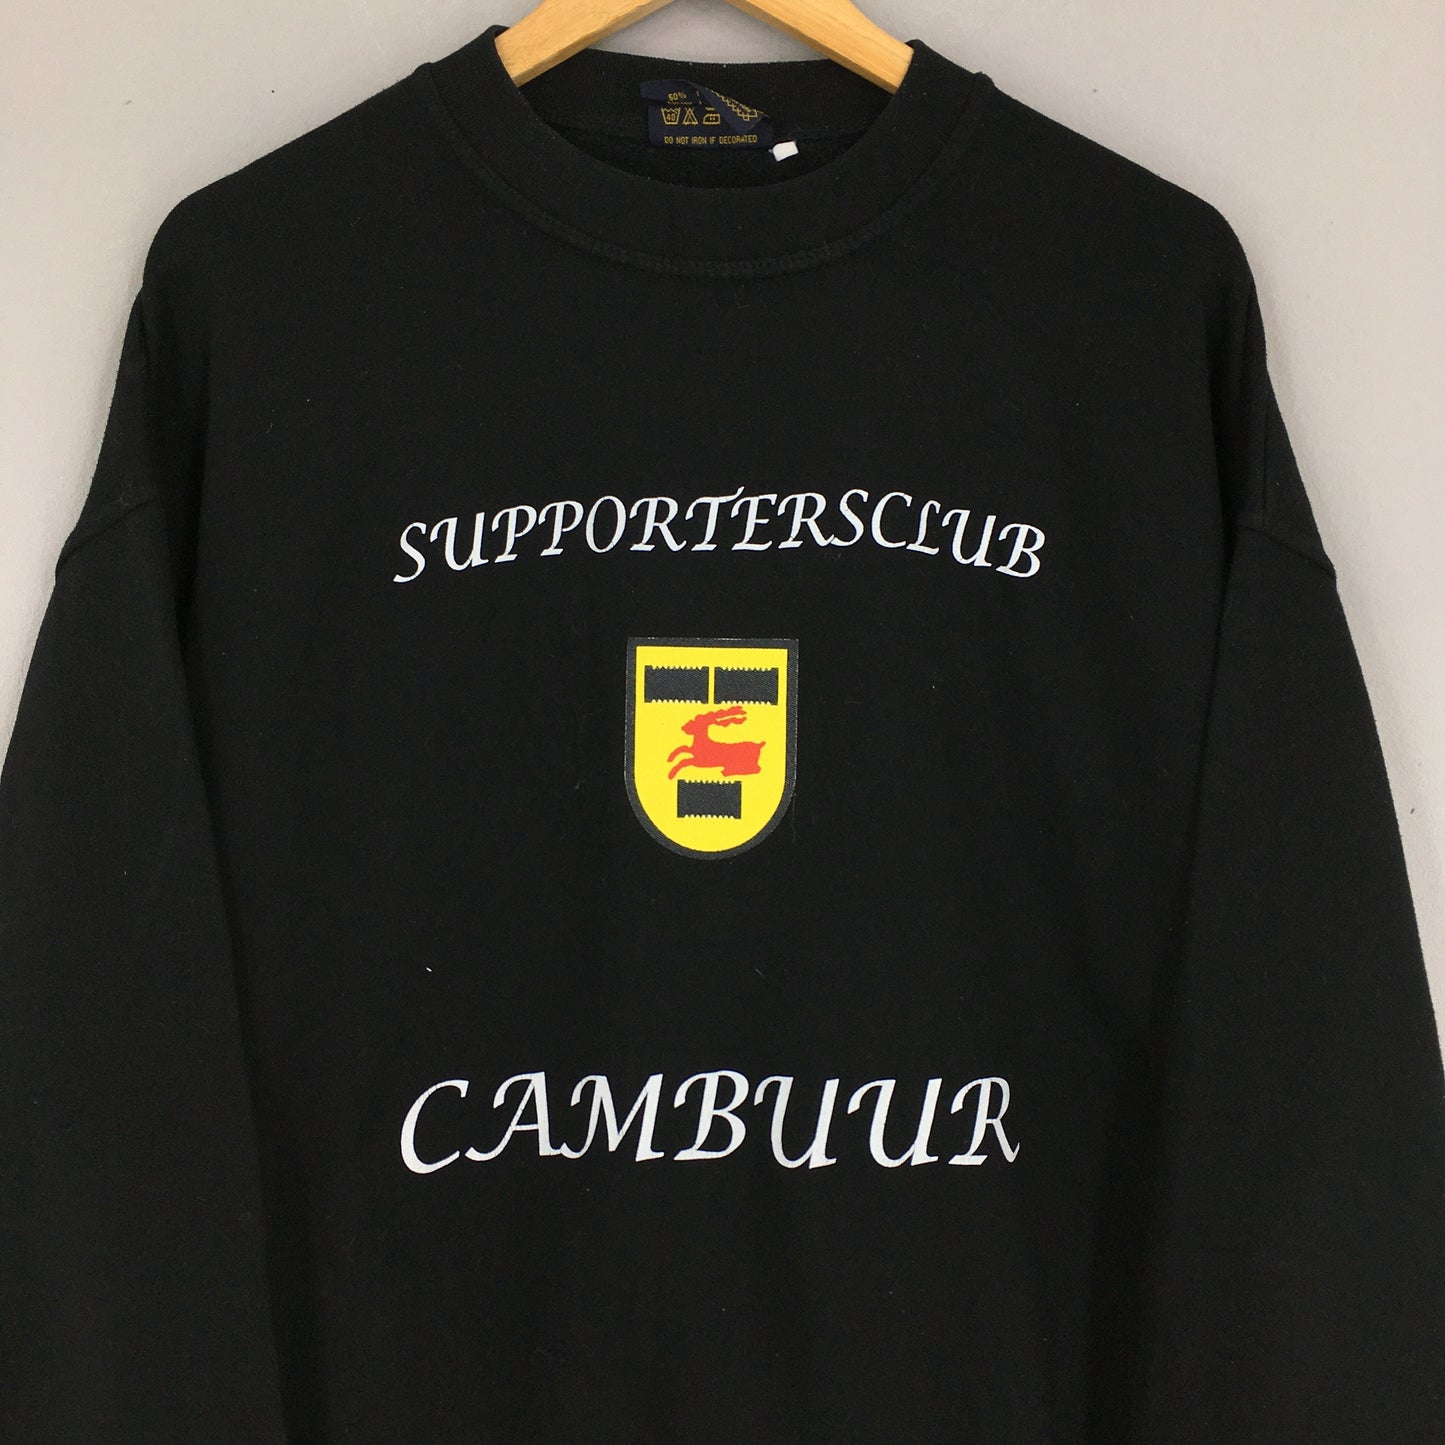 Supportersclub SC Cambuur Black Sweatshirt Large